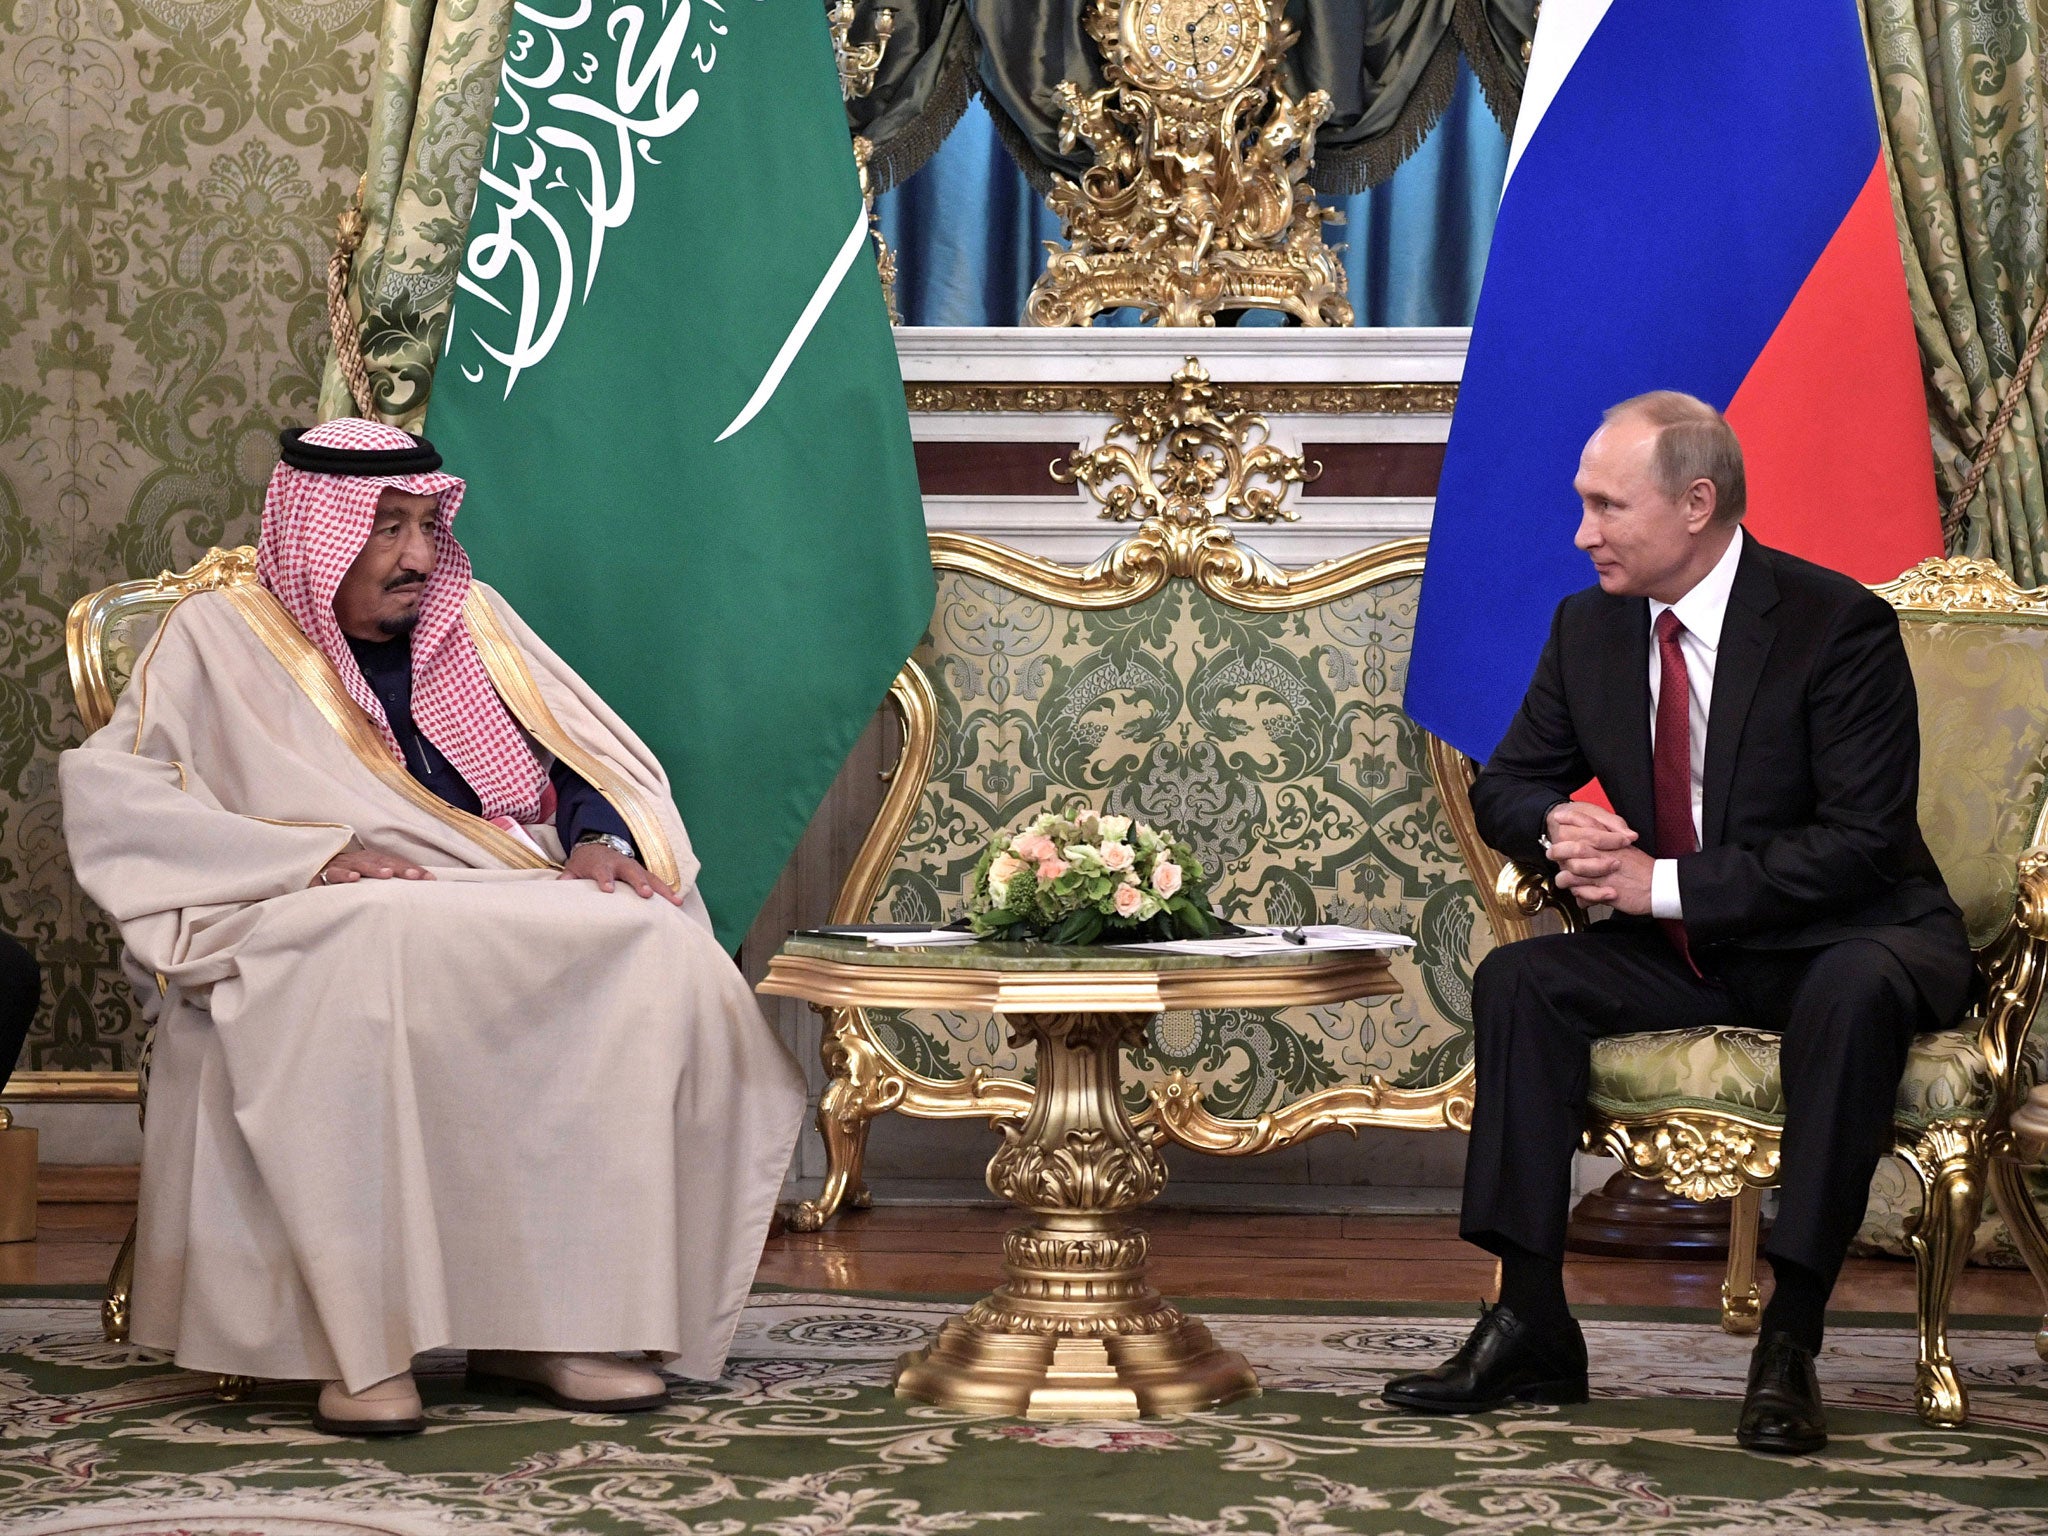 The Saudi King met with Russia’s President in the Kremlin 